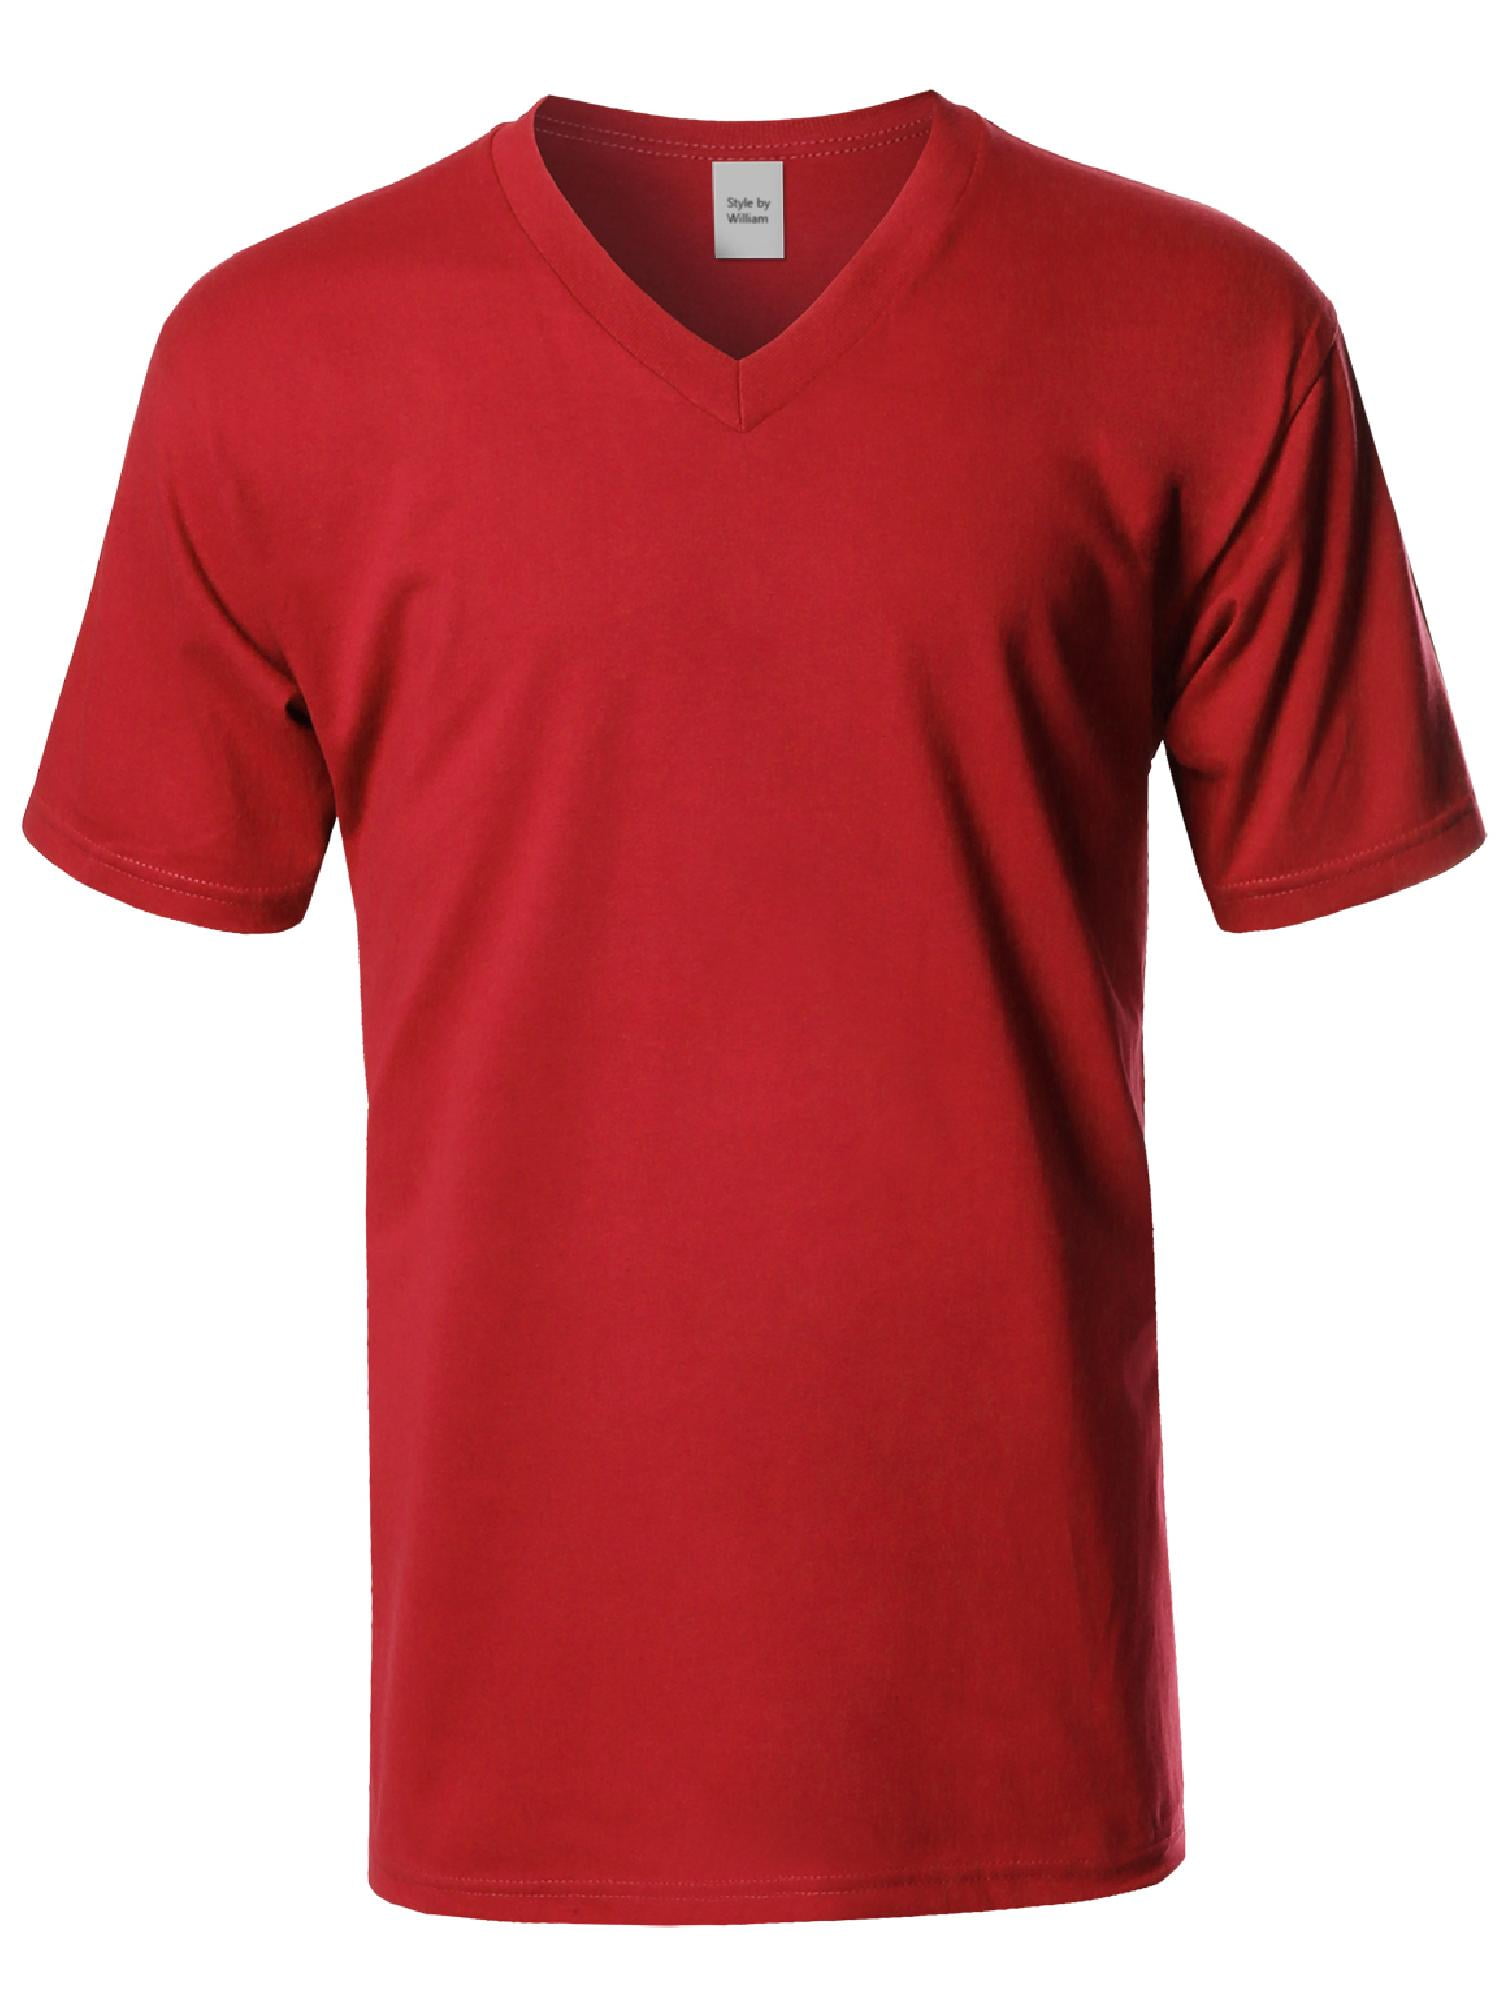 FashionOutfit Men's Basic Short Sleeve V-neck Cotton T-shirt S-5XL ...